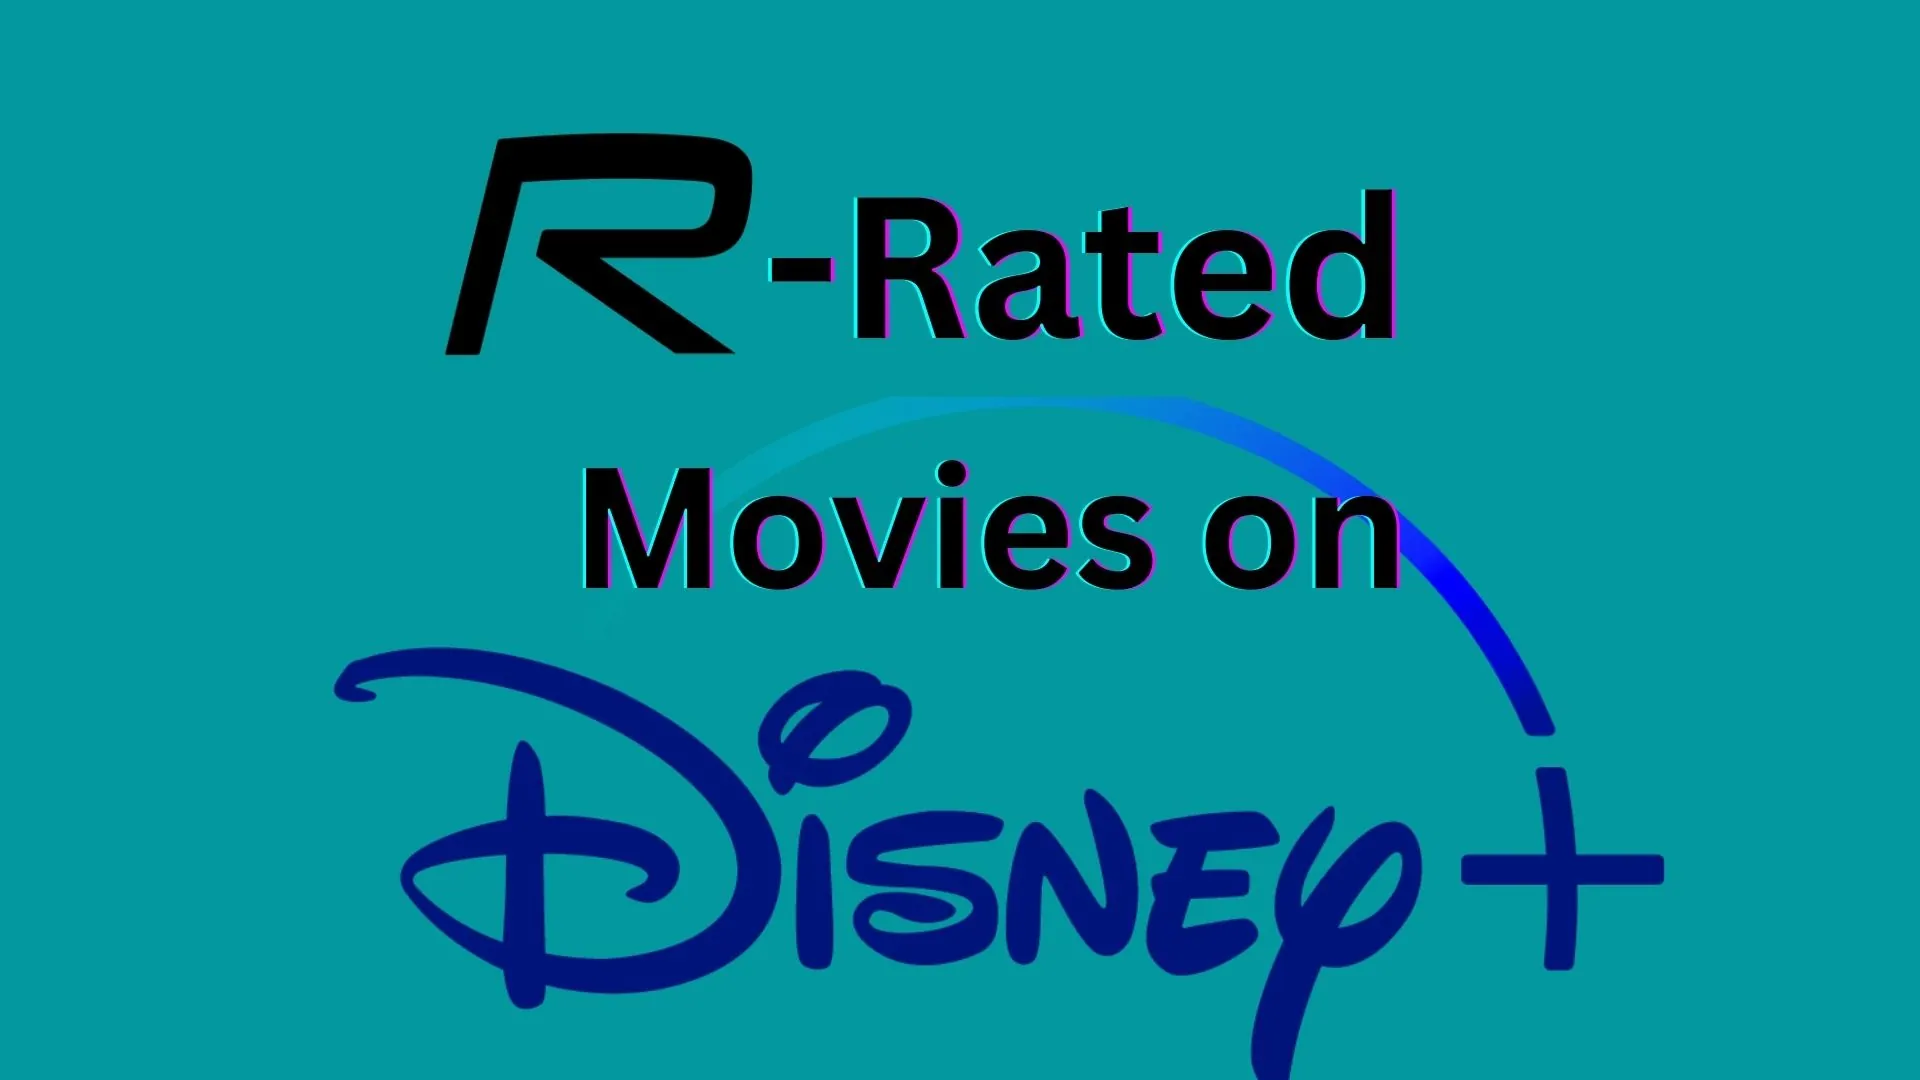 R Rated Movies on Disney Plus